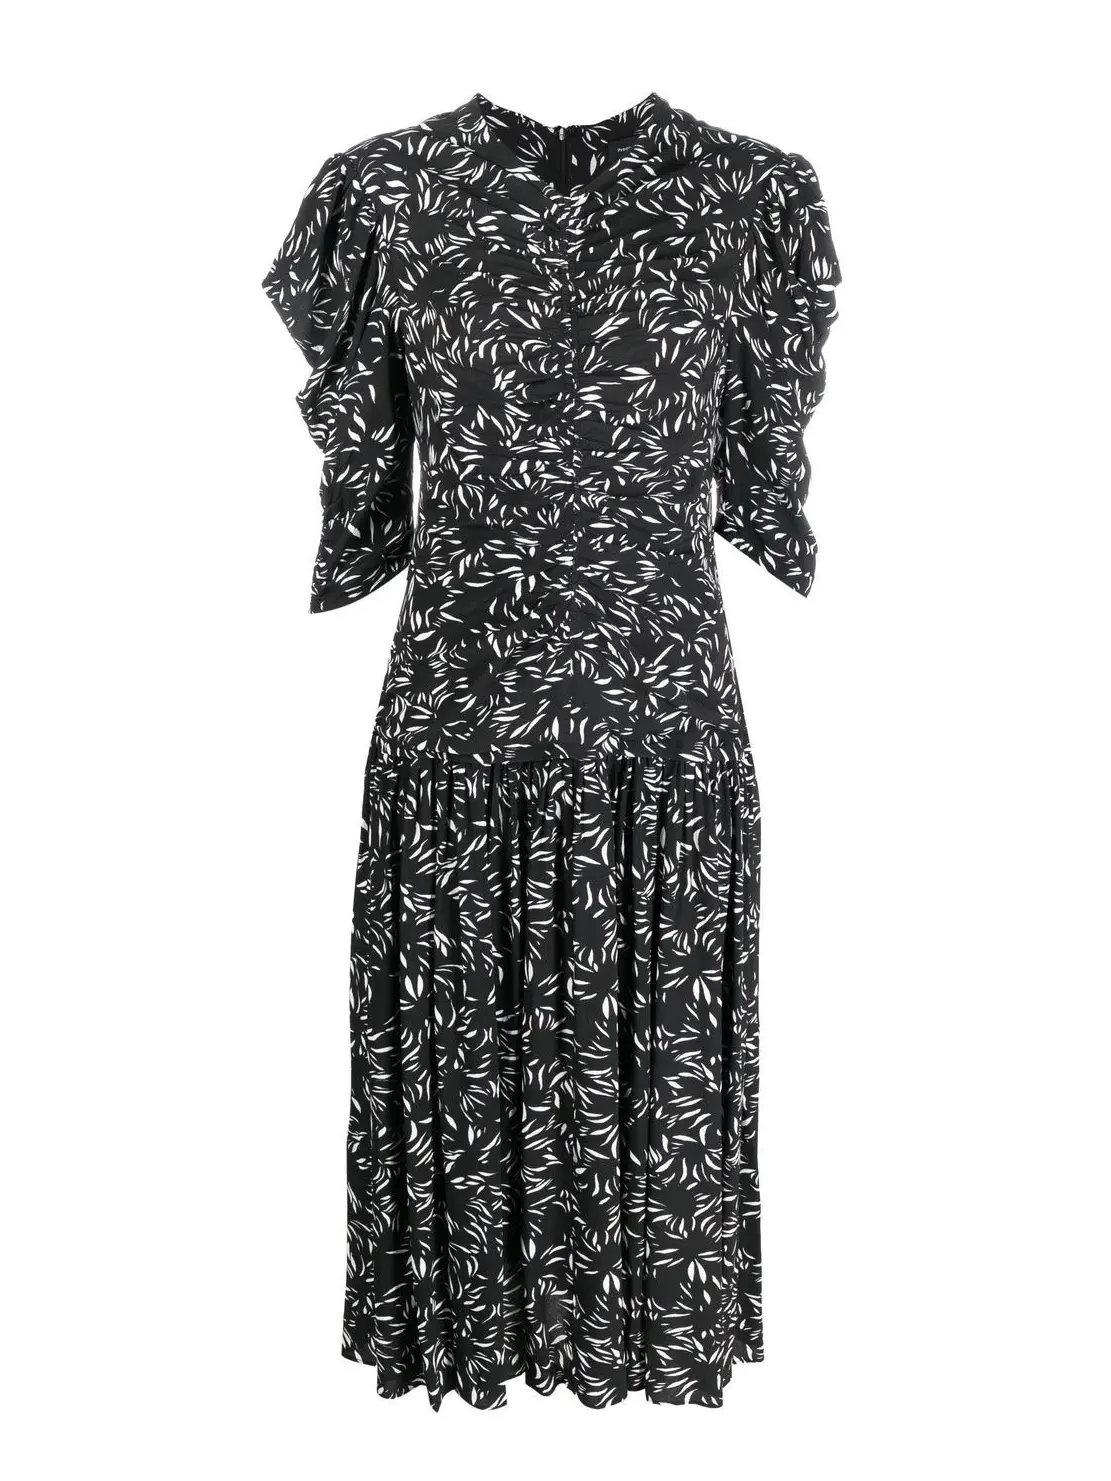 Crepe De Chine Dress, black-white print